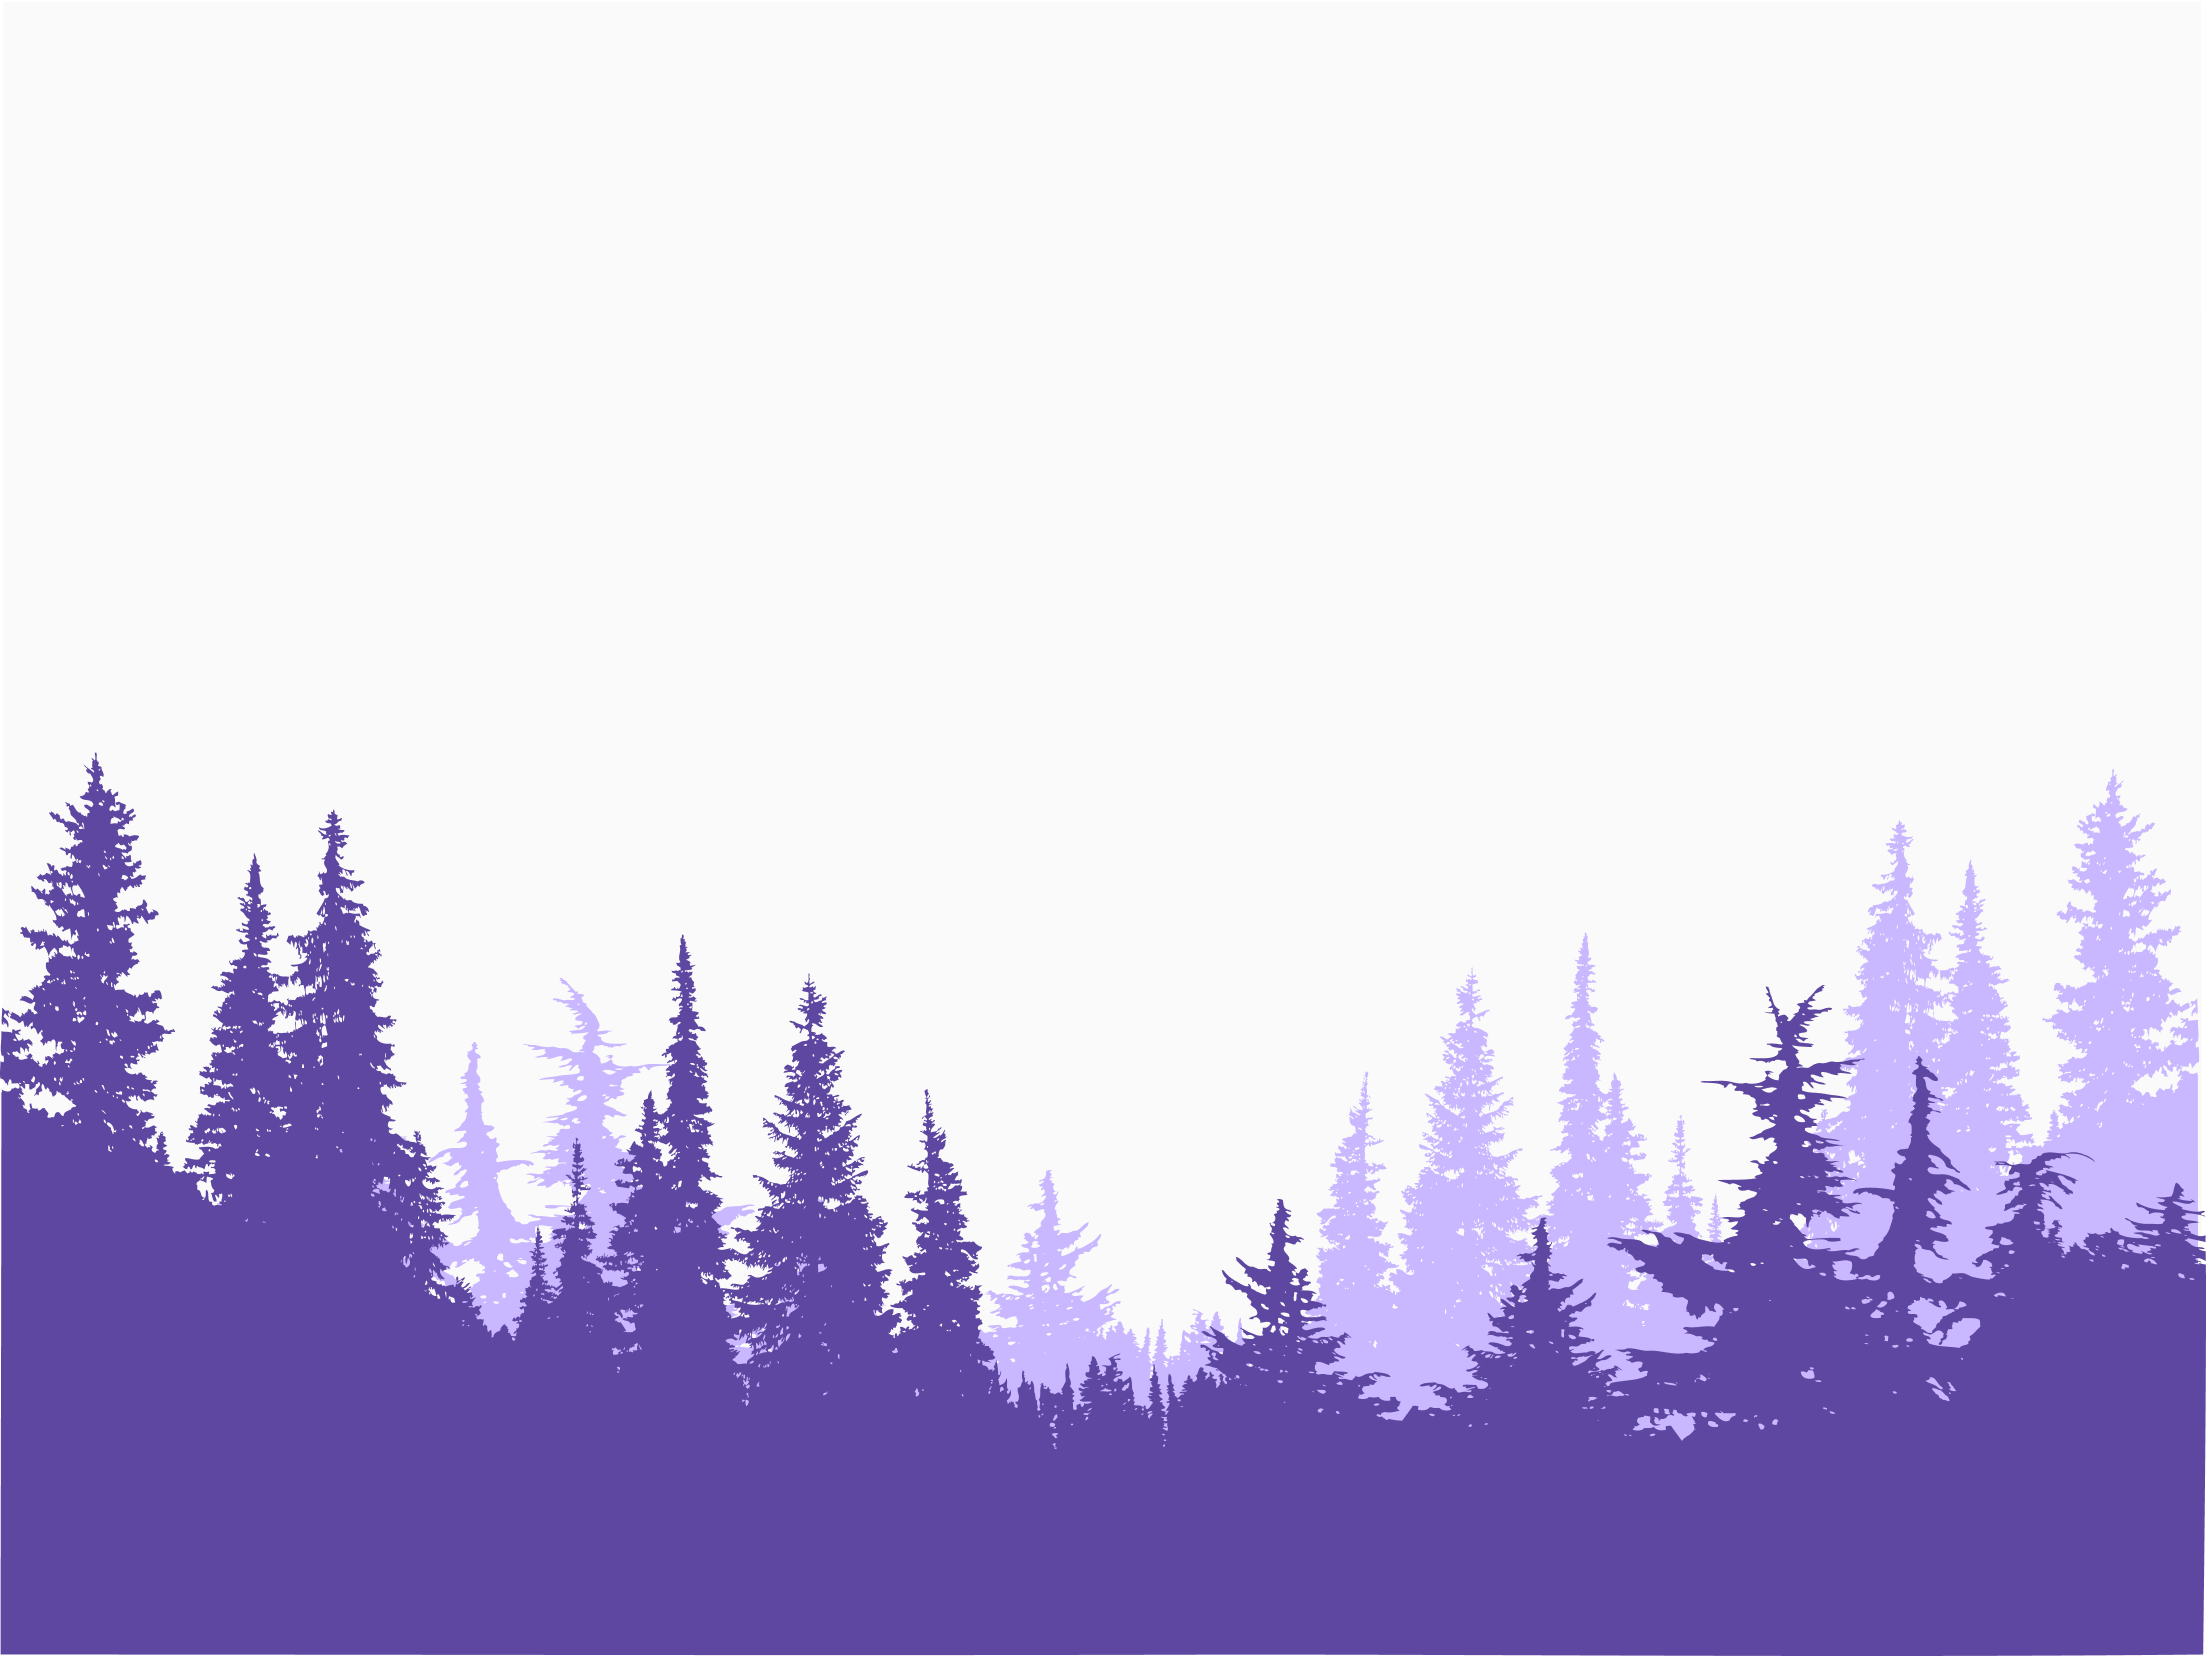 Plume IQ purple trees graphic